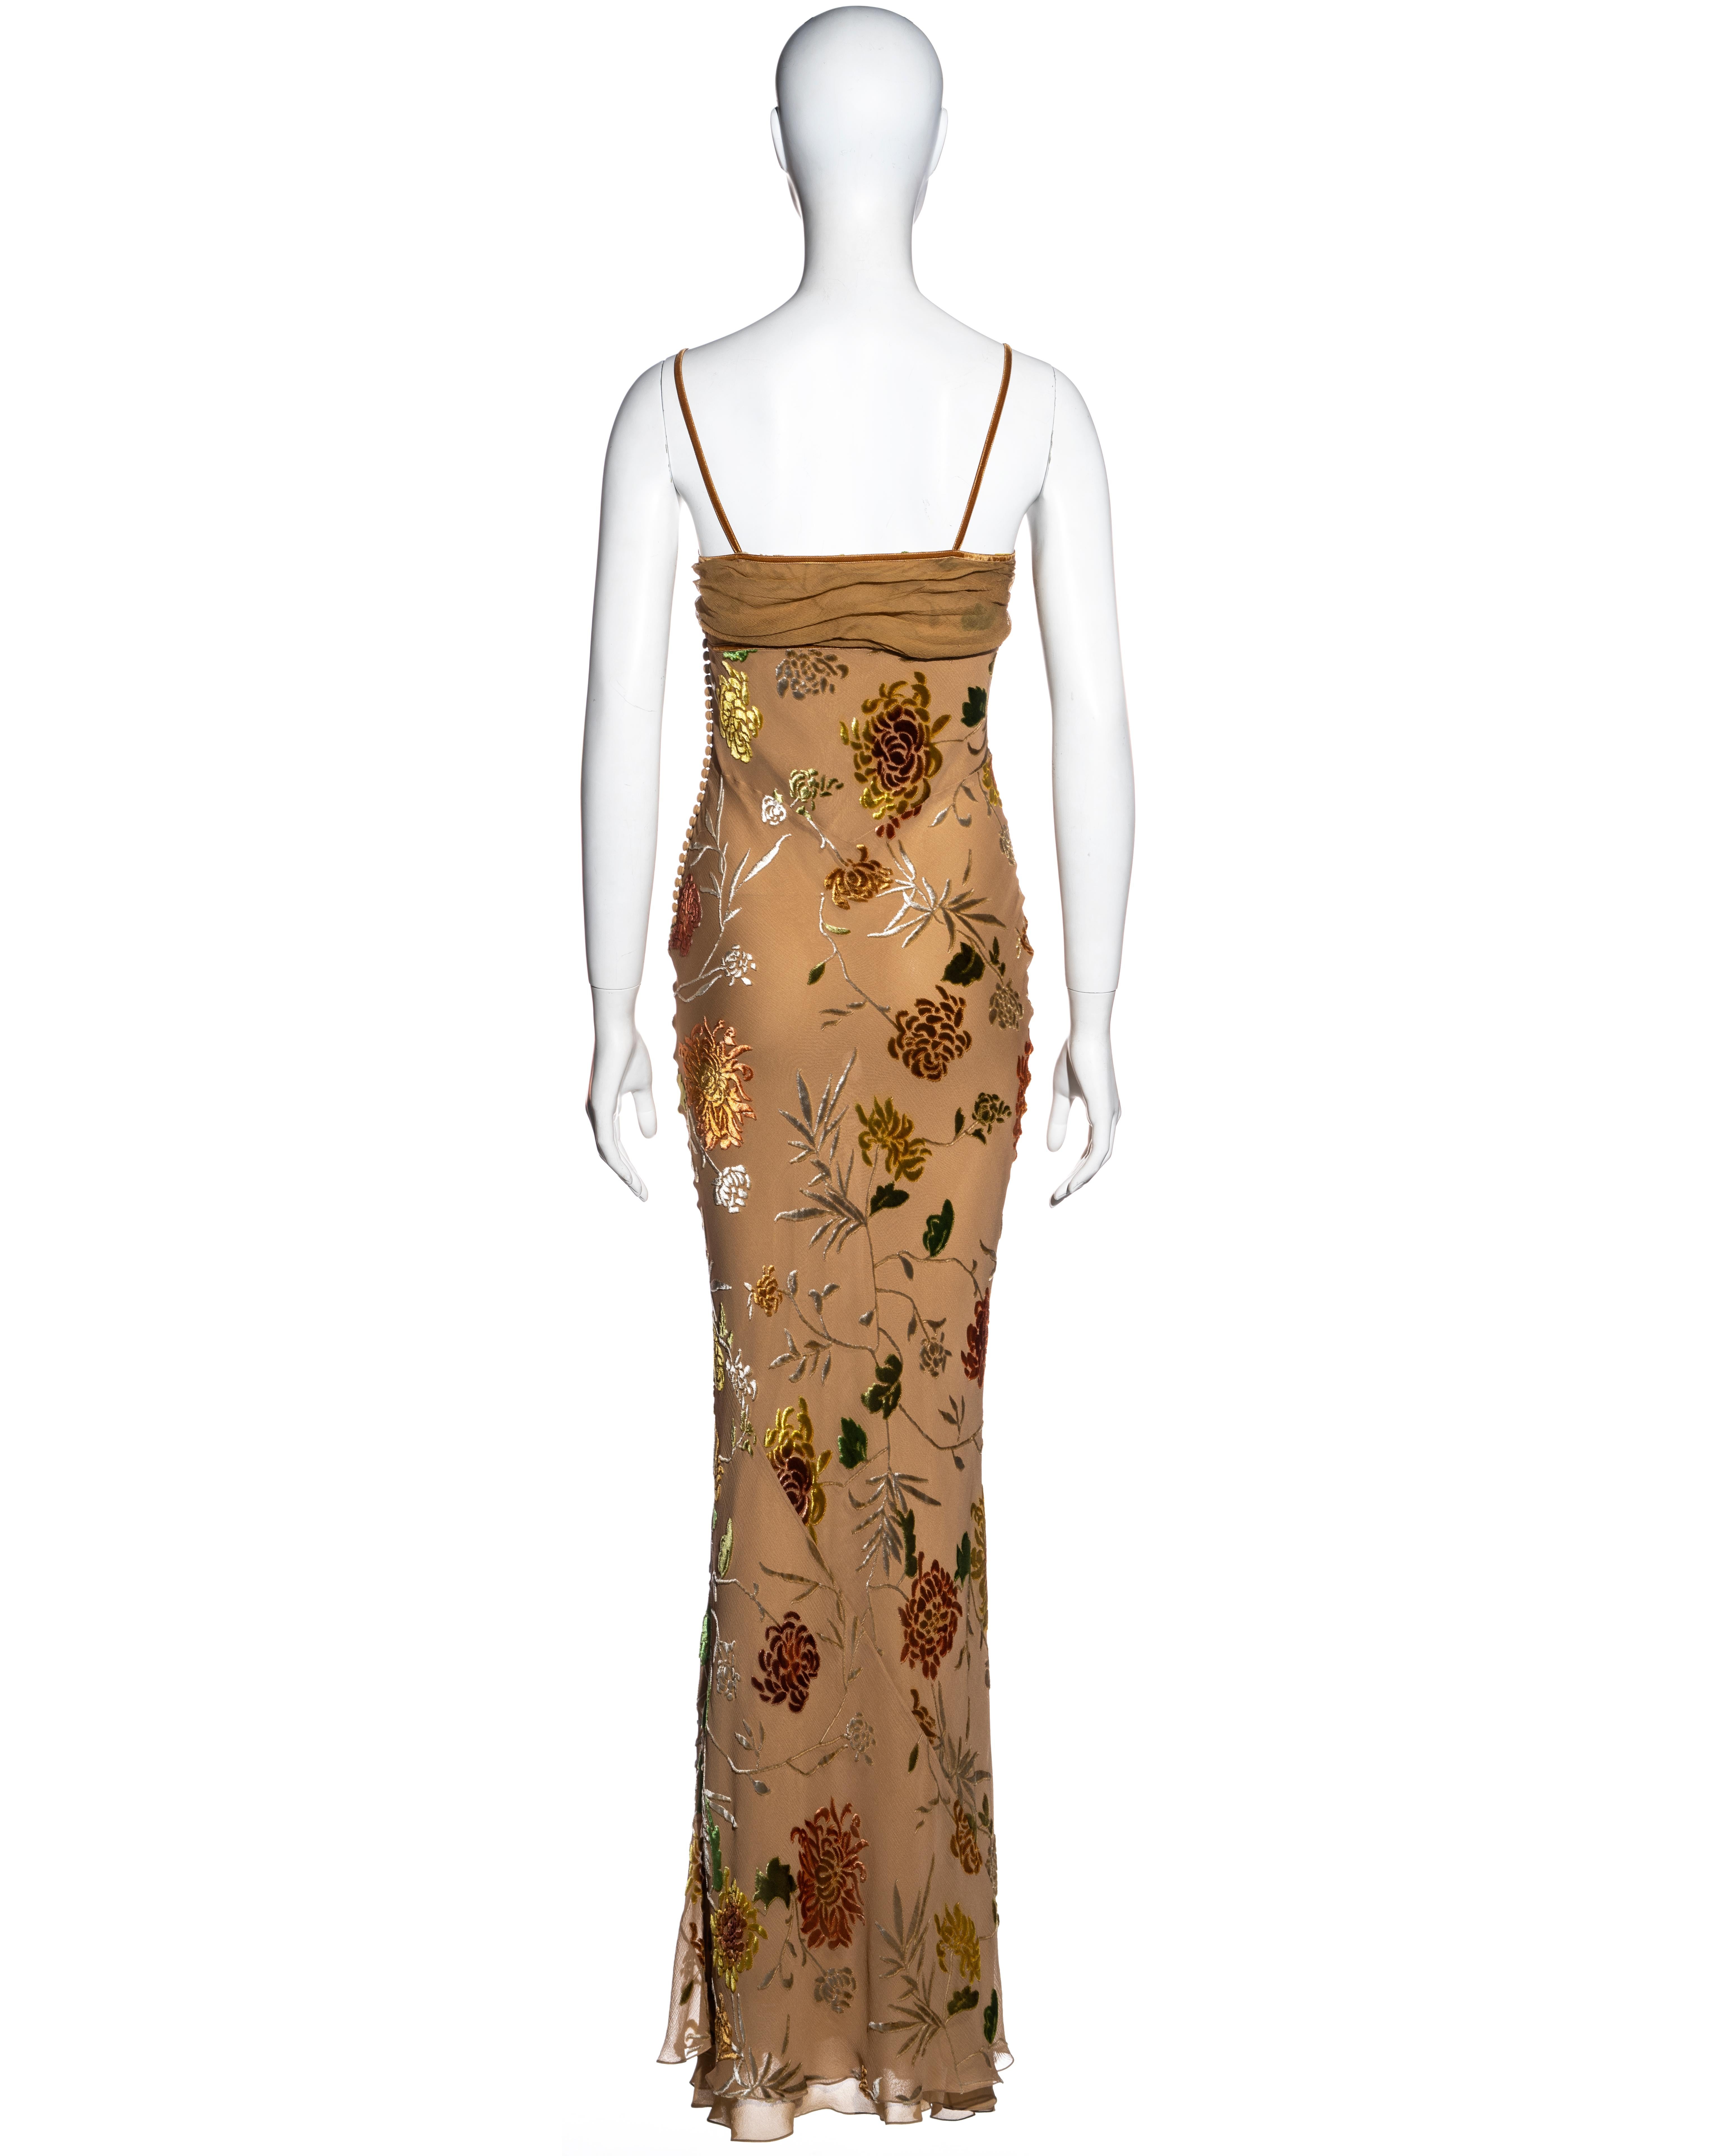 Women's Christian Dior by John Galliano brown floral silk devoré maxi dress, ss 2006